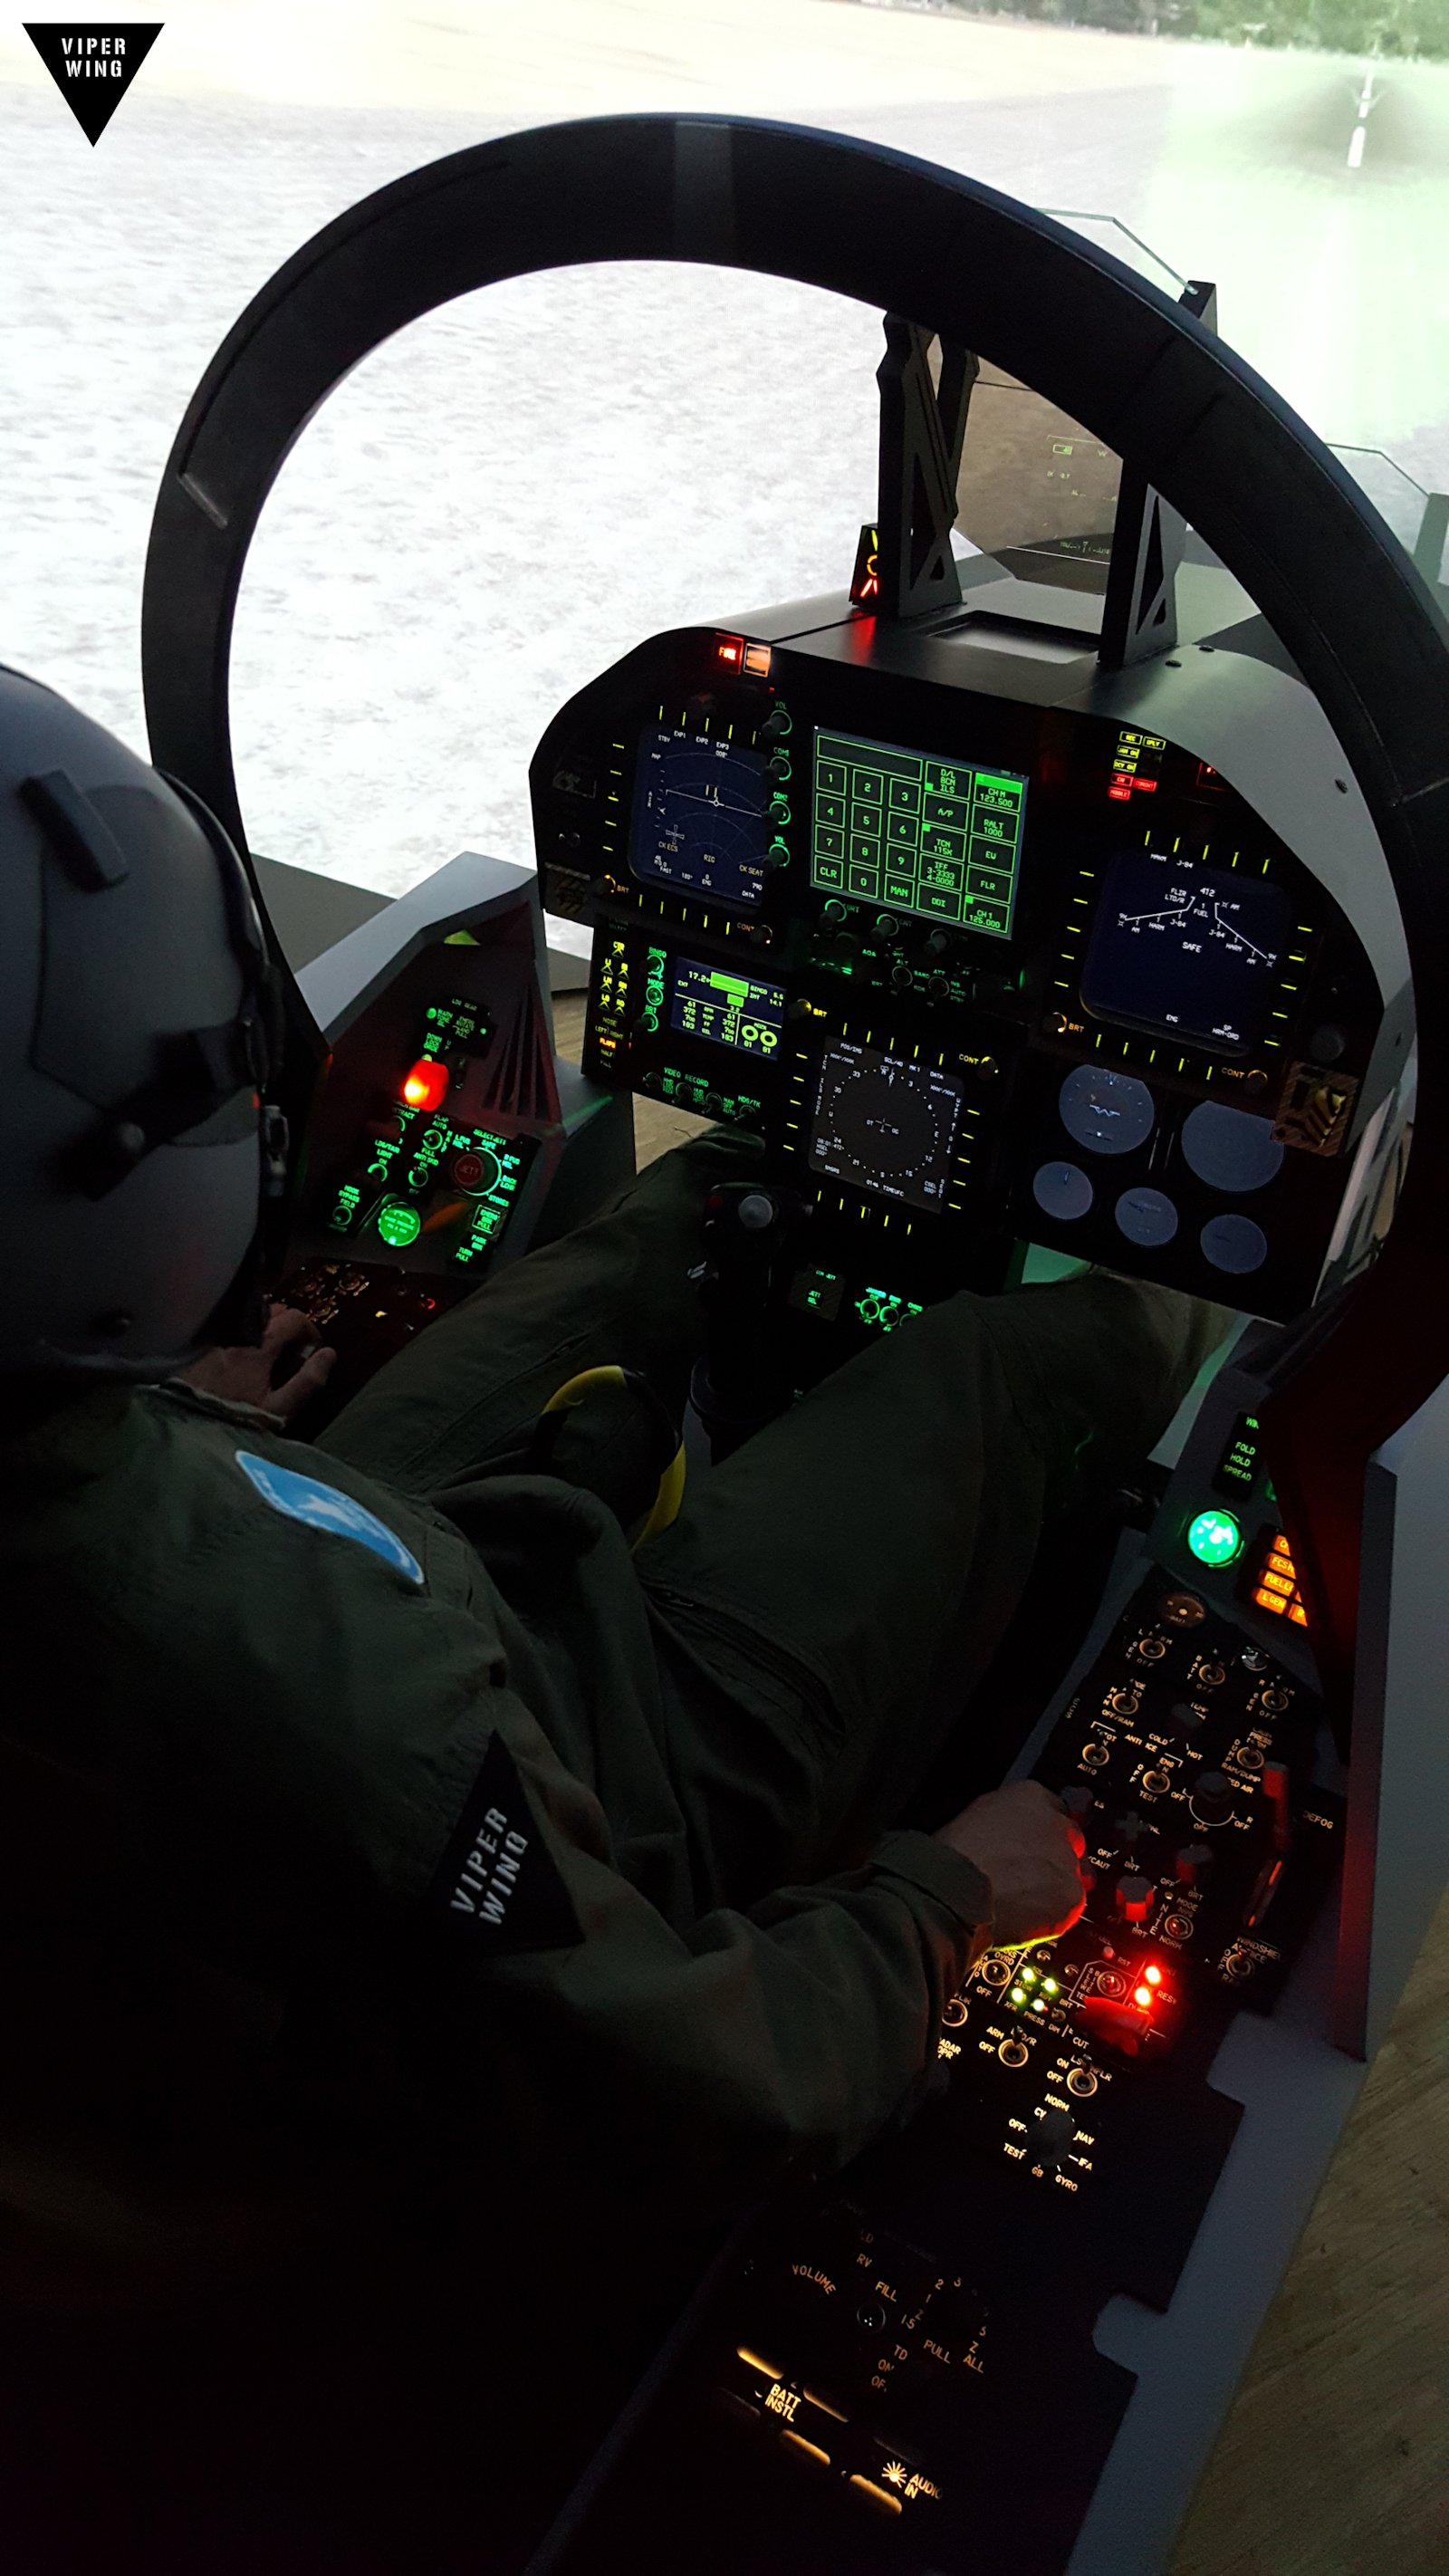 F-18, F/A-18 simulator fighter jet cockpit - all physical Hornet sim